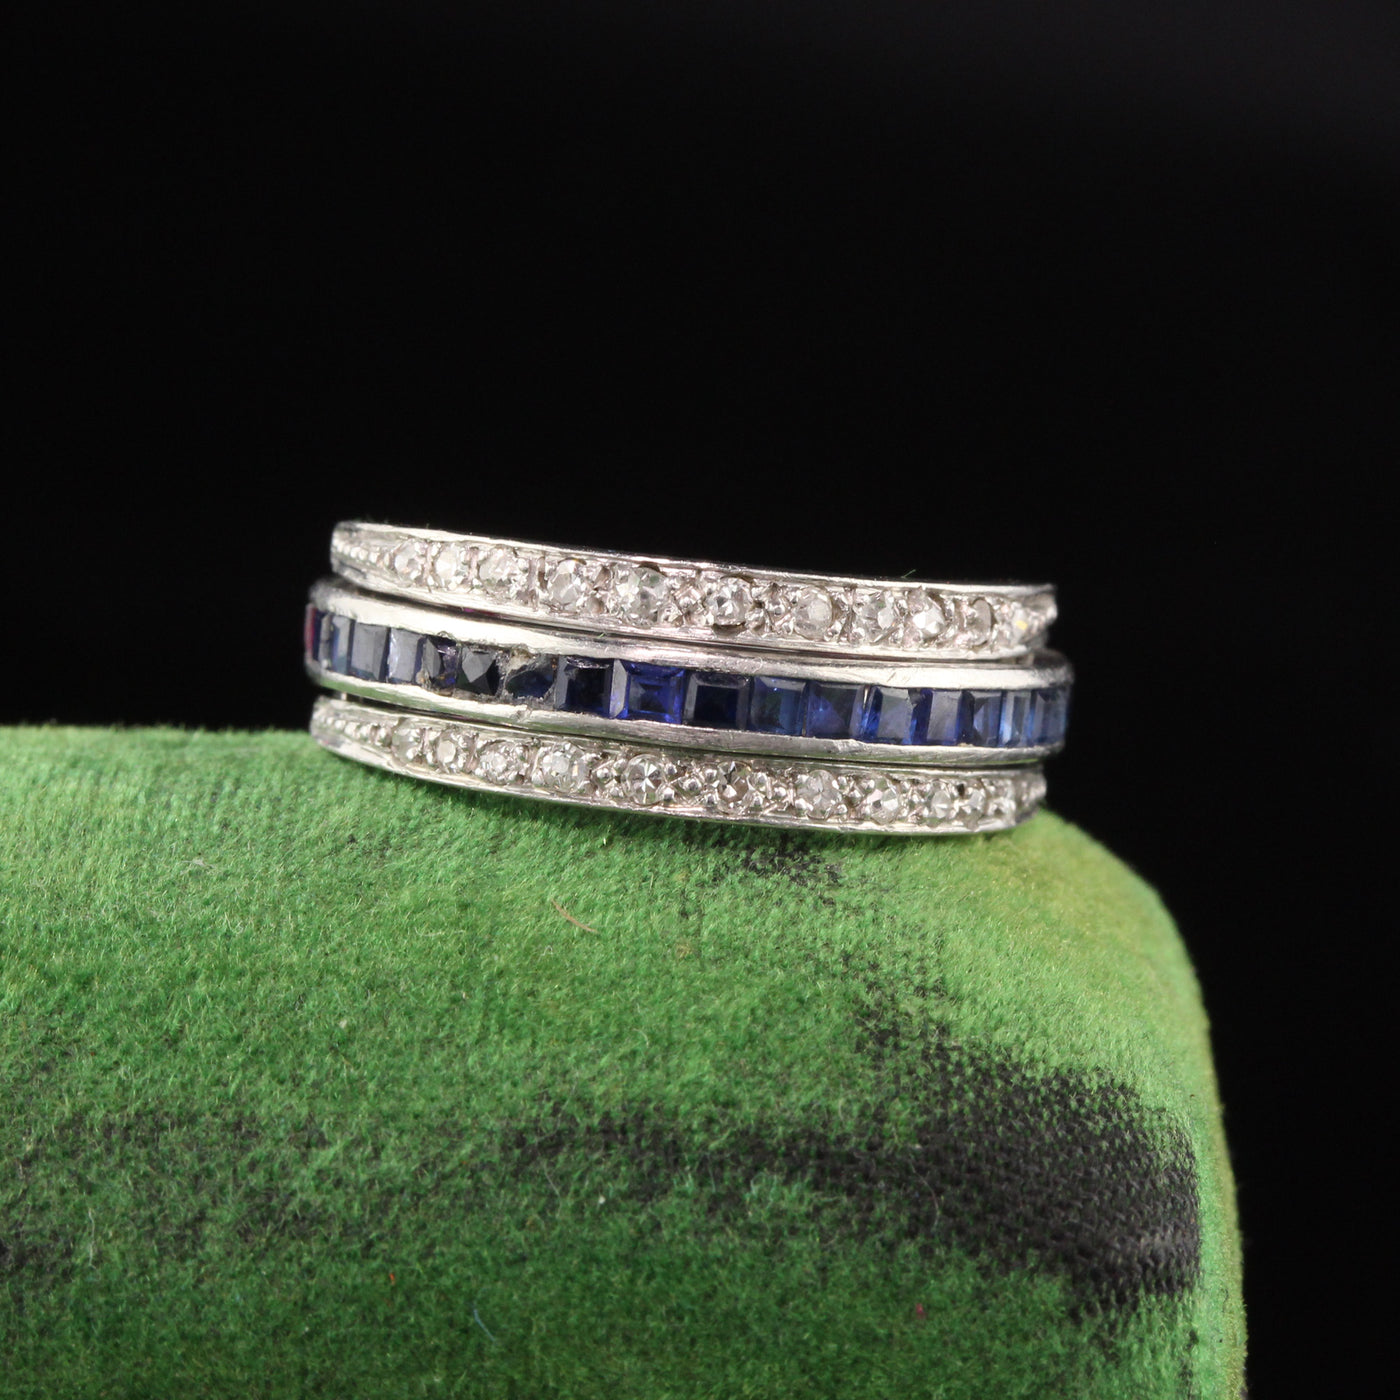 Antique Art Deco Platinum Diamond, Sapphire, and Ruby Flip Ring - Size 6.25